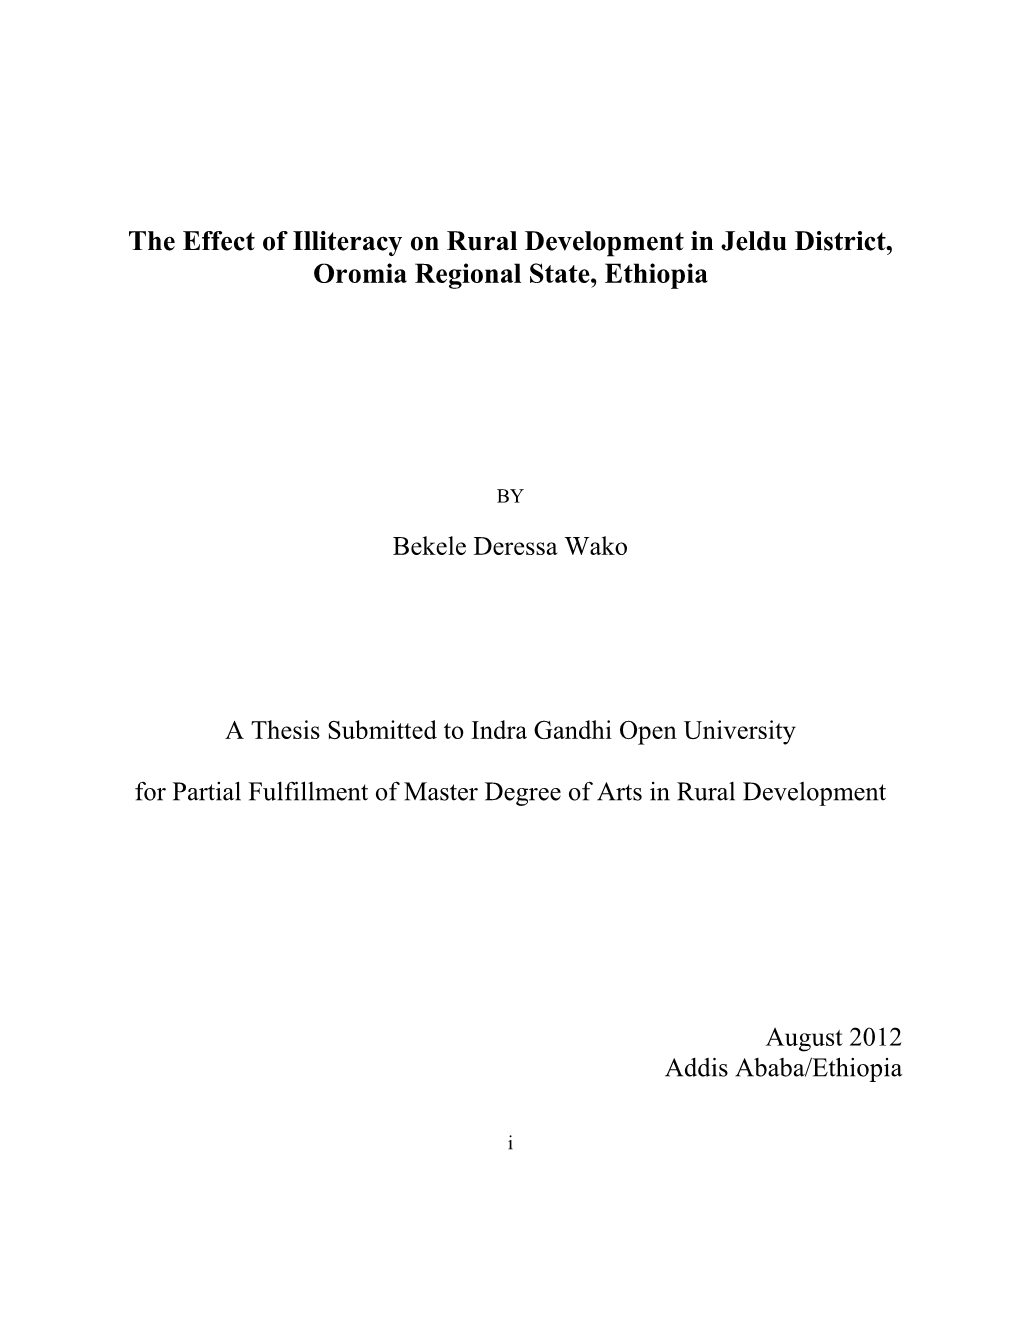 The Effect of Illiteracy on Rural Development in Jeldu District, Oromia Regional State, Ethiopia